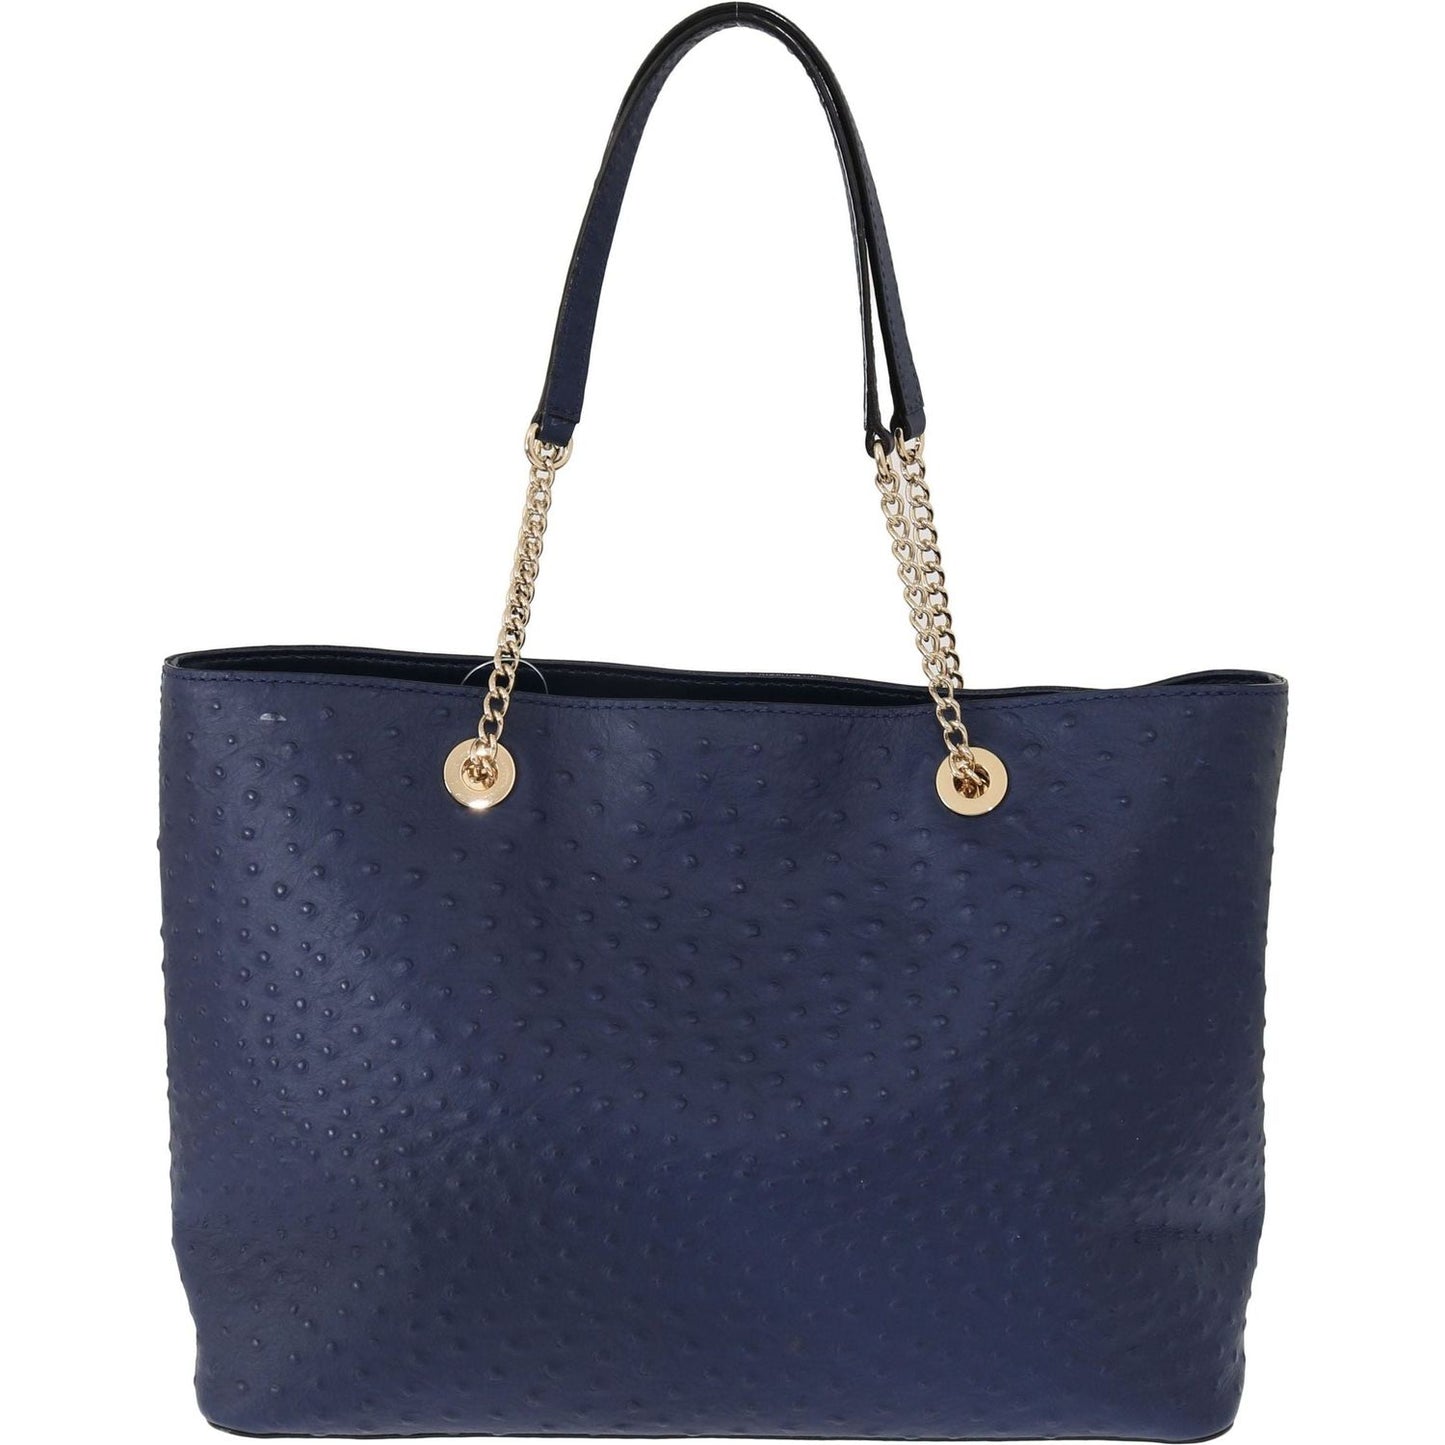 Kate Spade Elegant Ostrich Leather Handbag in Blue blue-leather-halsey-la-vita-ostrich-handbag WOMAN HANDBAG IMG_9209-scaled-314ce4d3-290.jpg